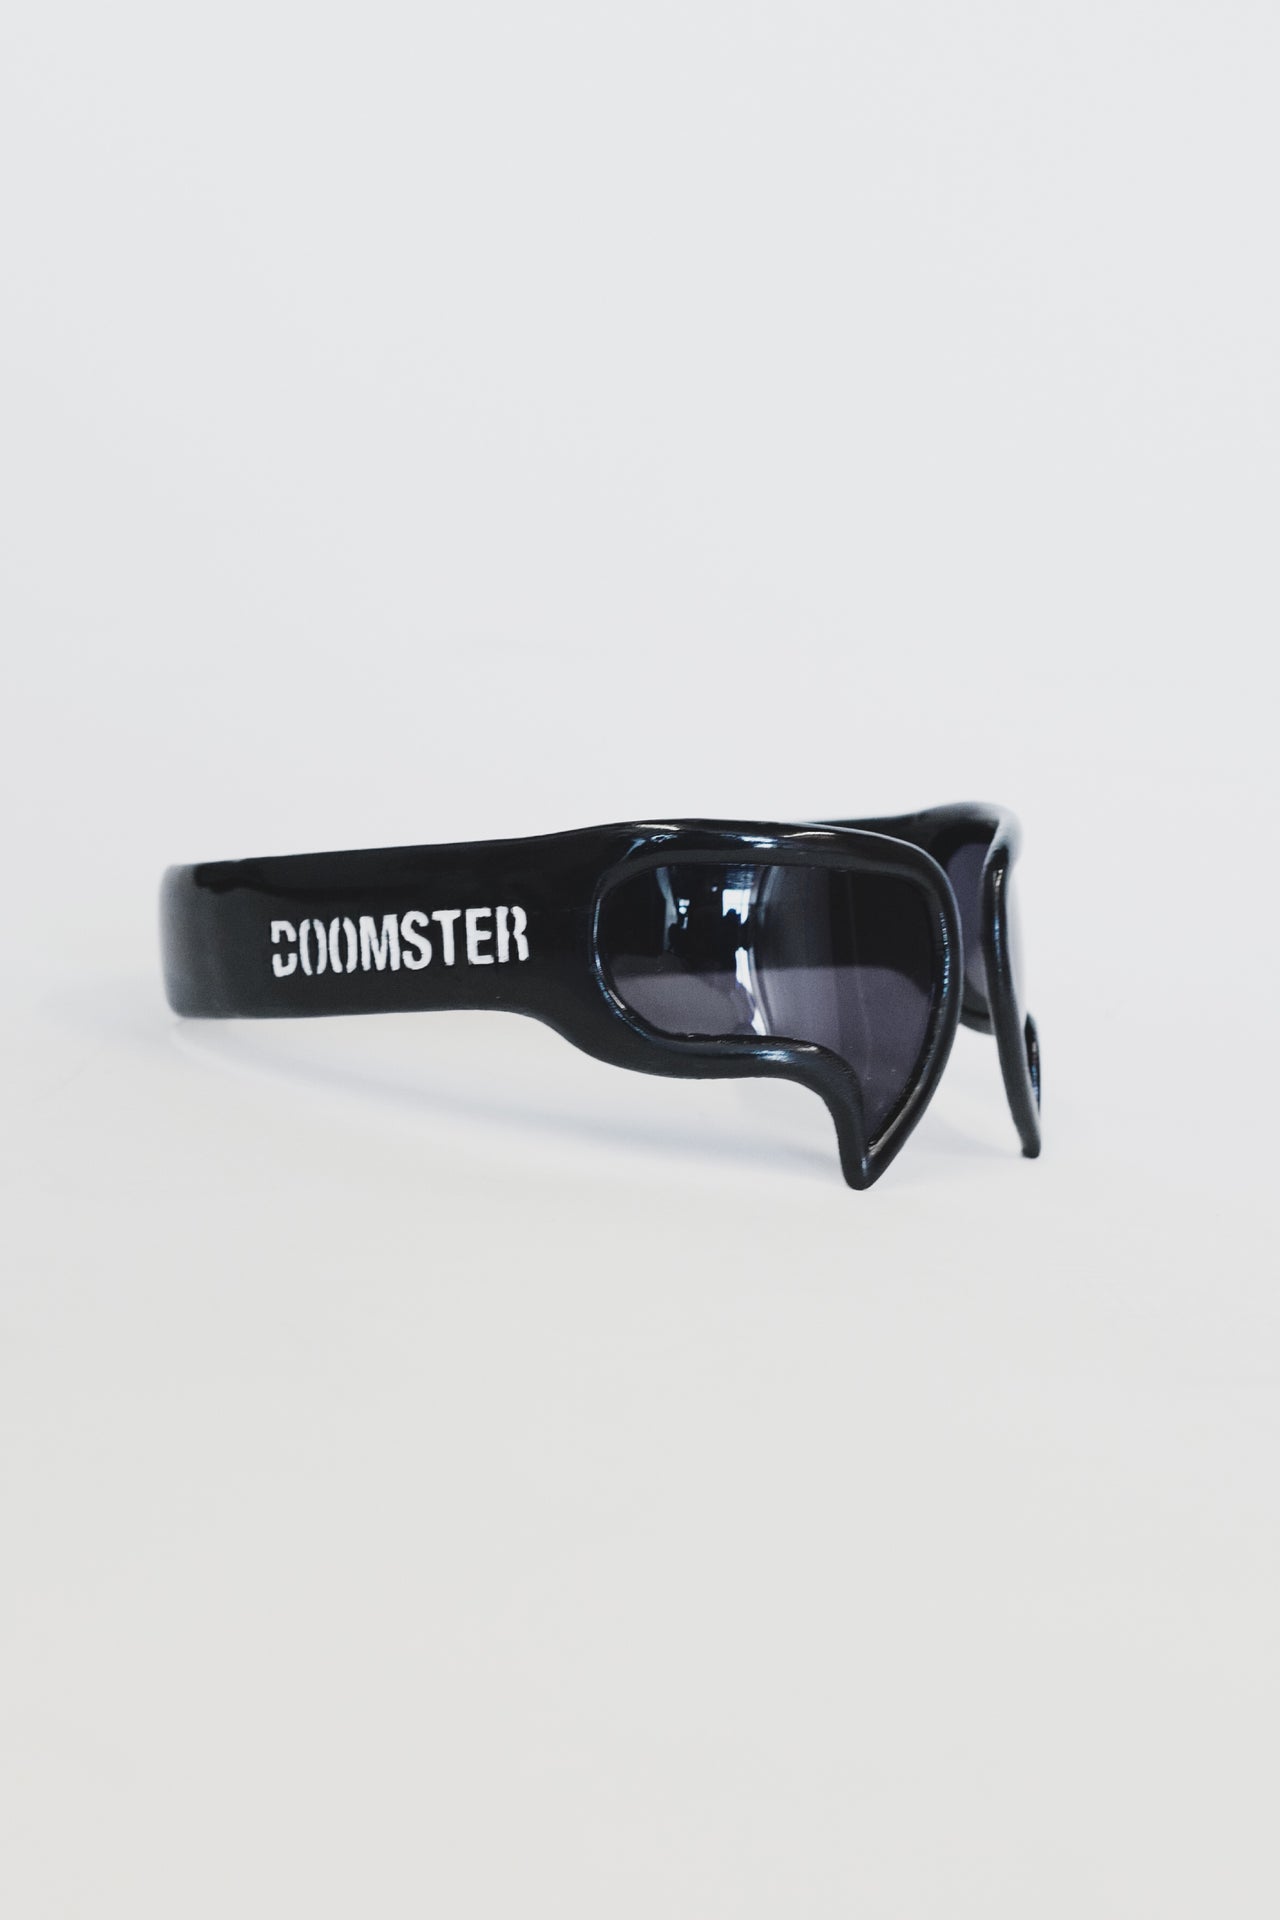 3D Printed Sunglasses (Black)